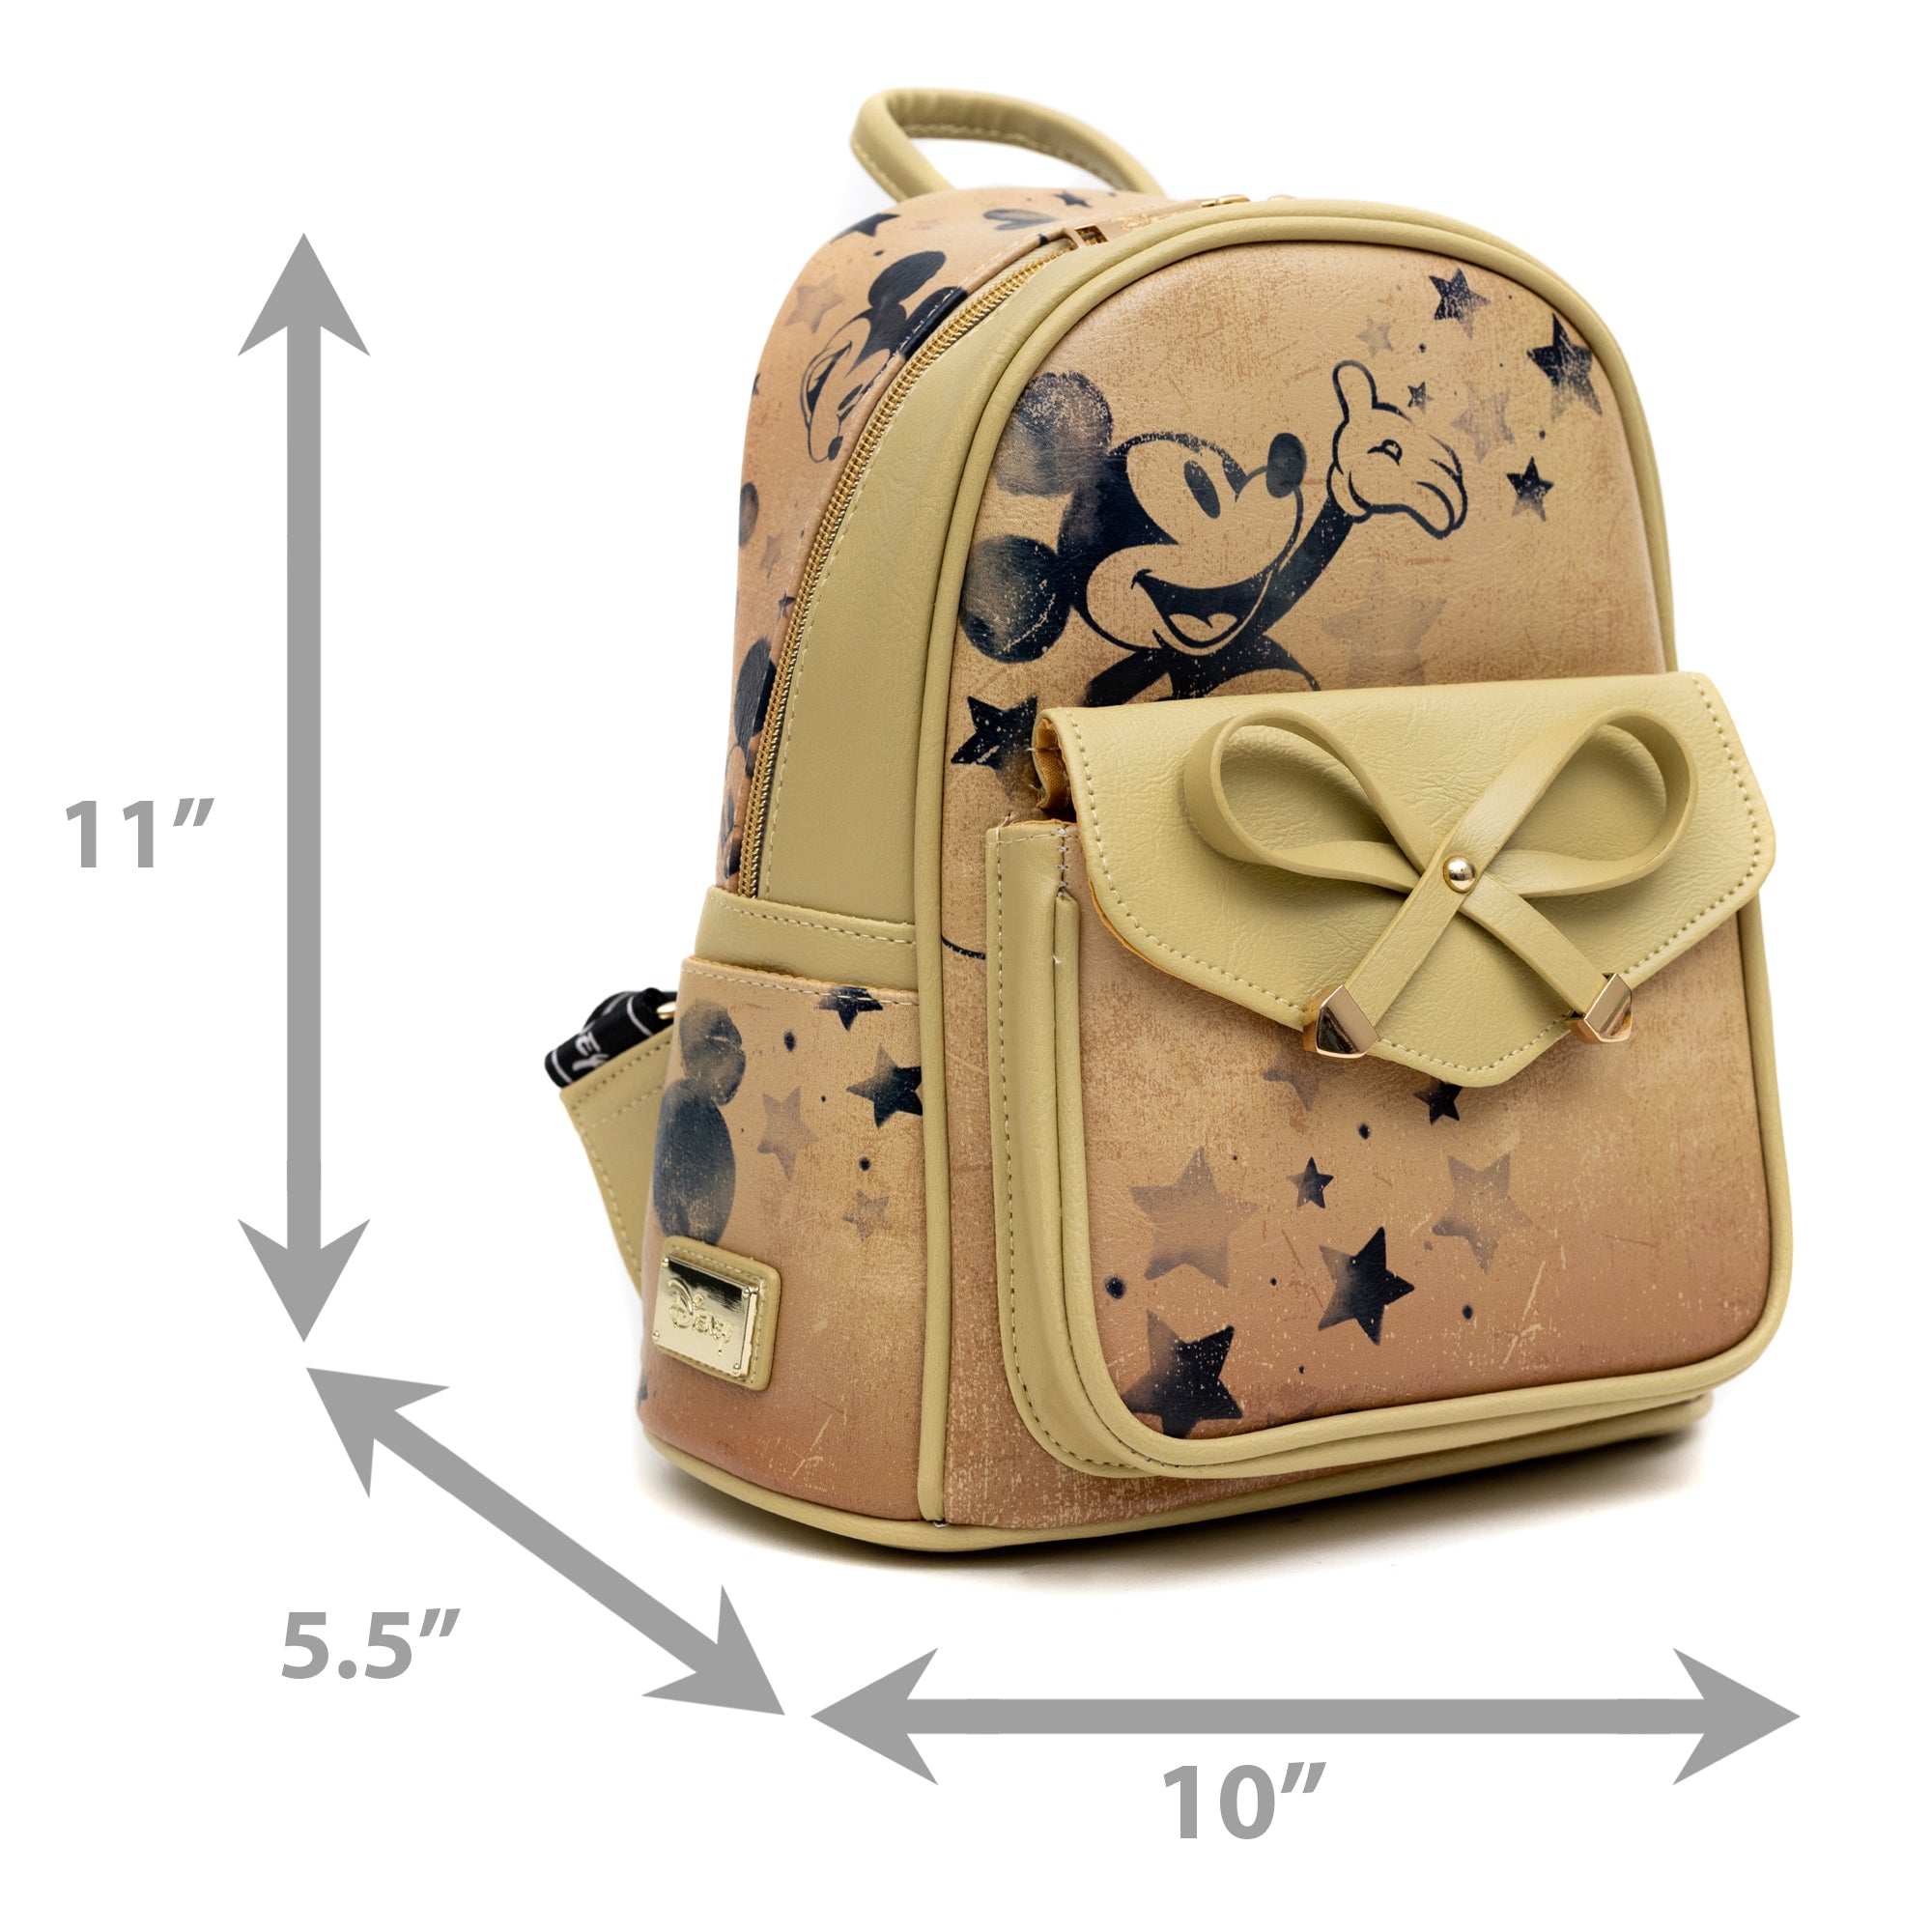 WondaPOP - Disney Mini Backpack Vintage Mickey Mouse